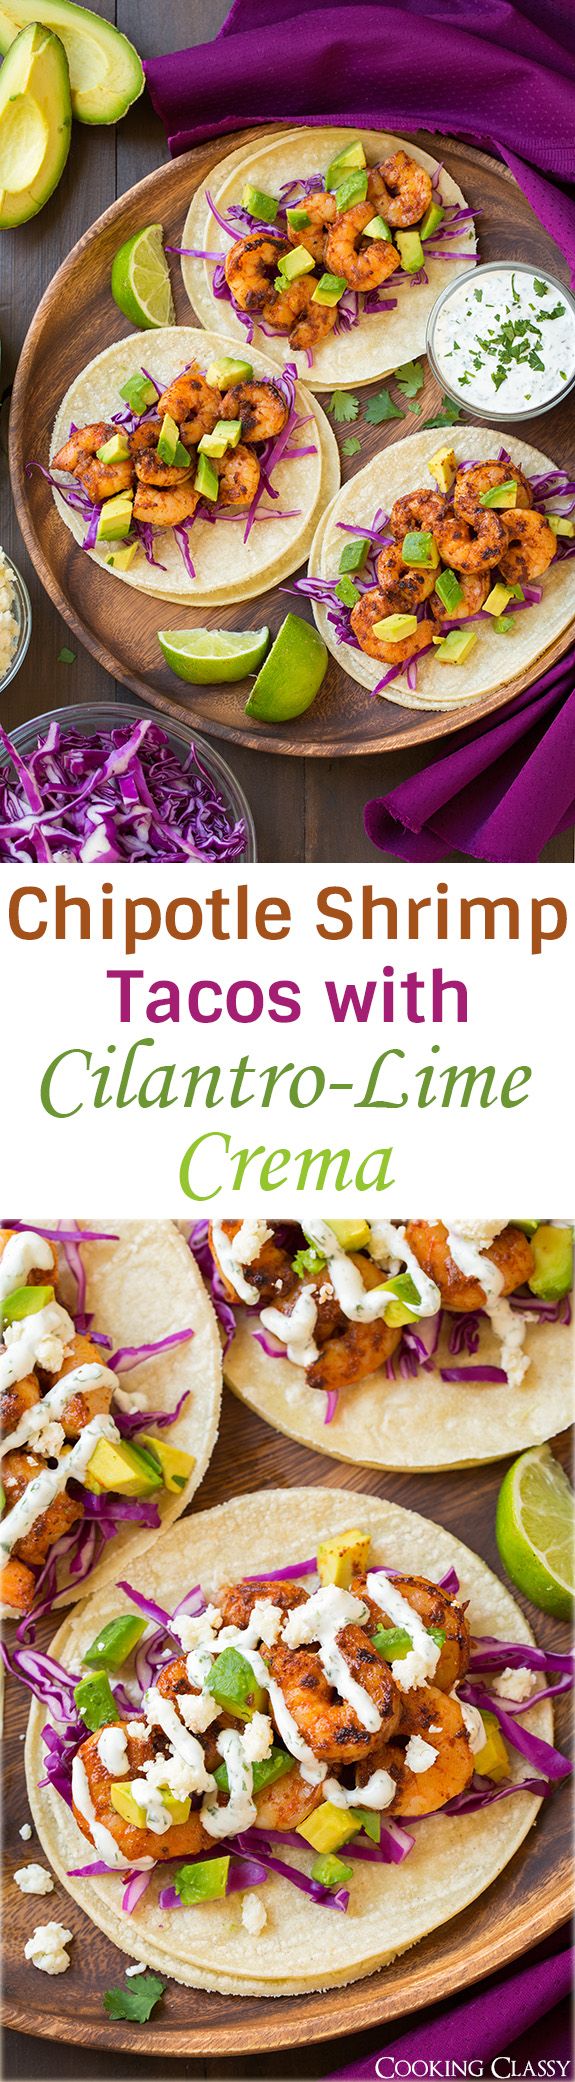 Chipotle Shrimp Tacos with Cilantro-Lime Crema